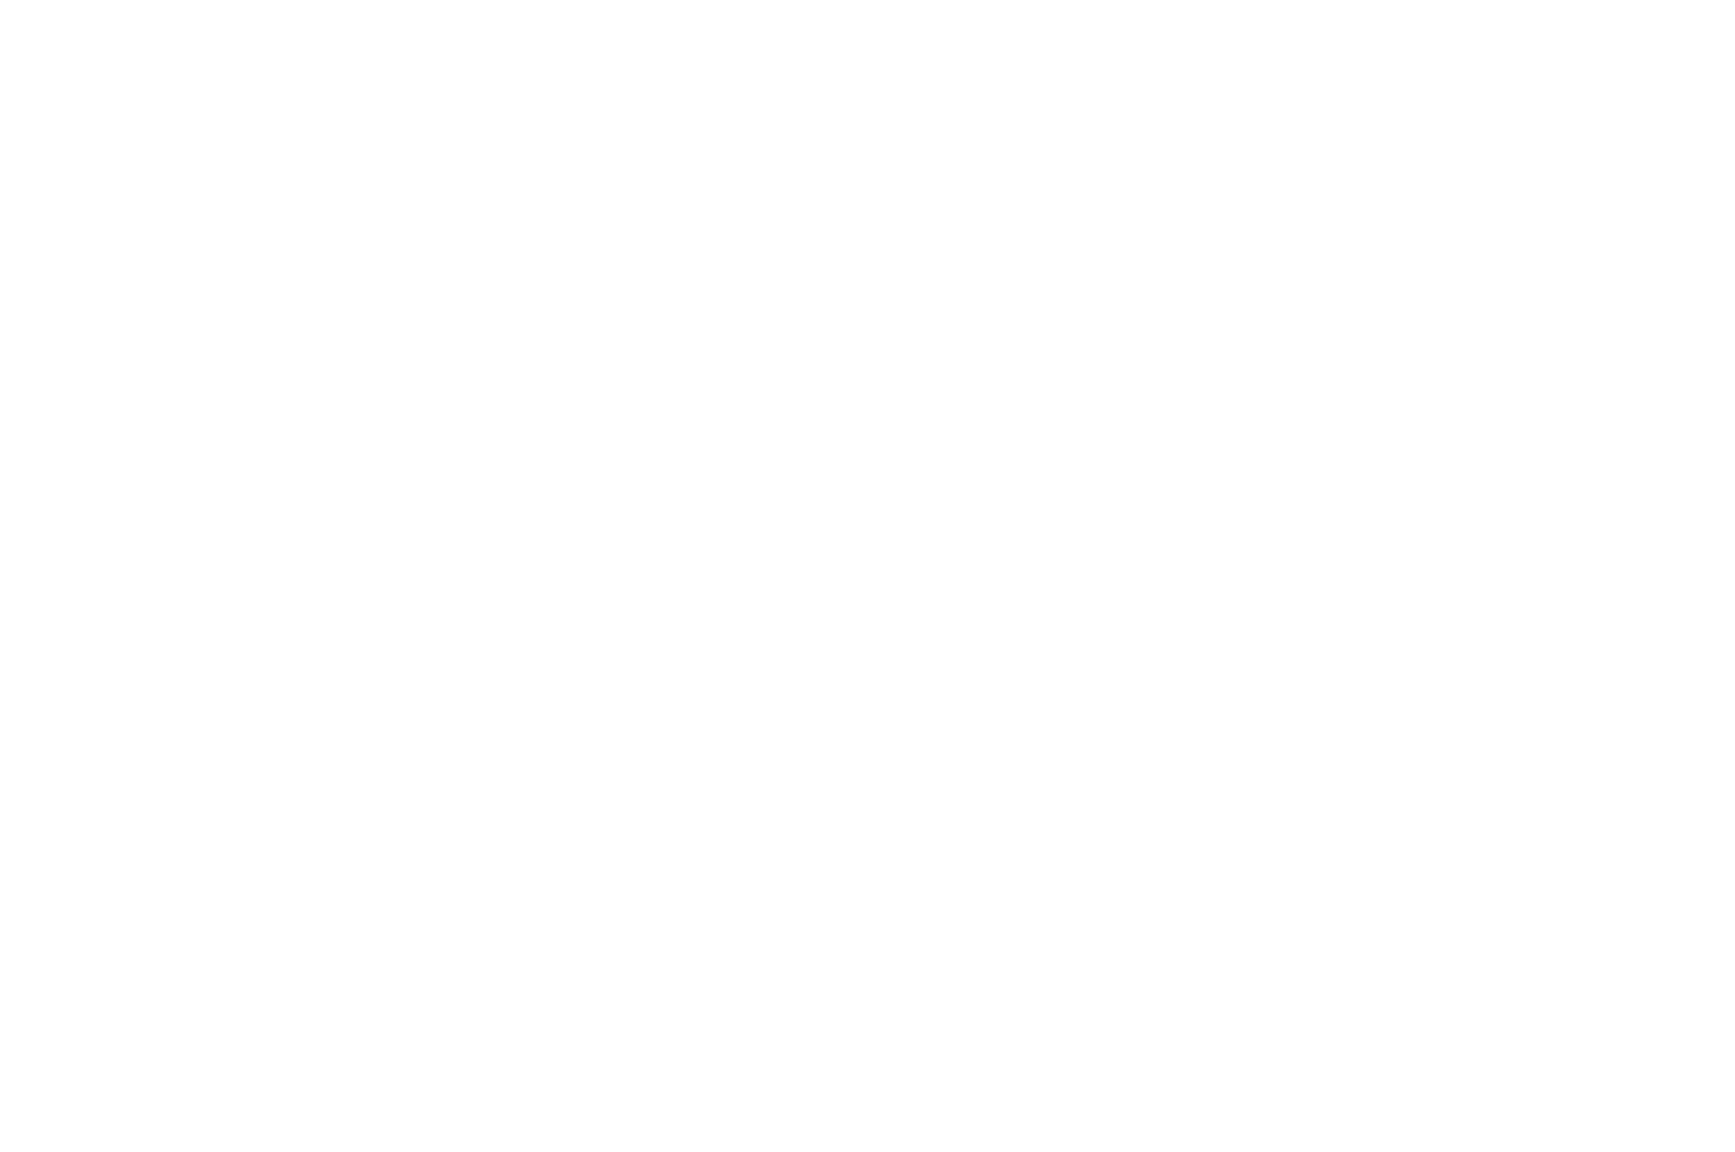 WINNER - New York Cinematography Award - 2021